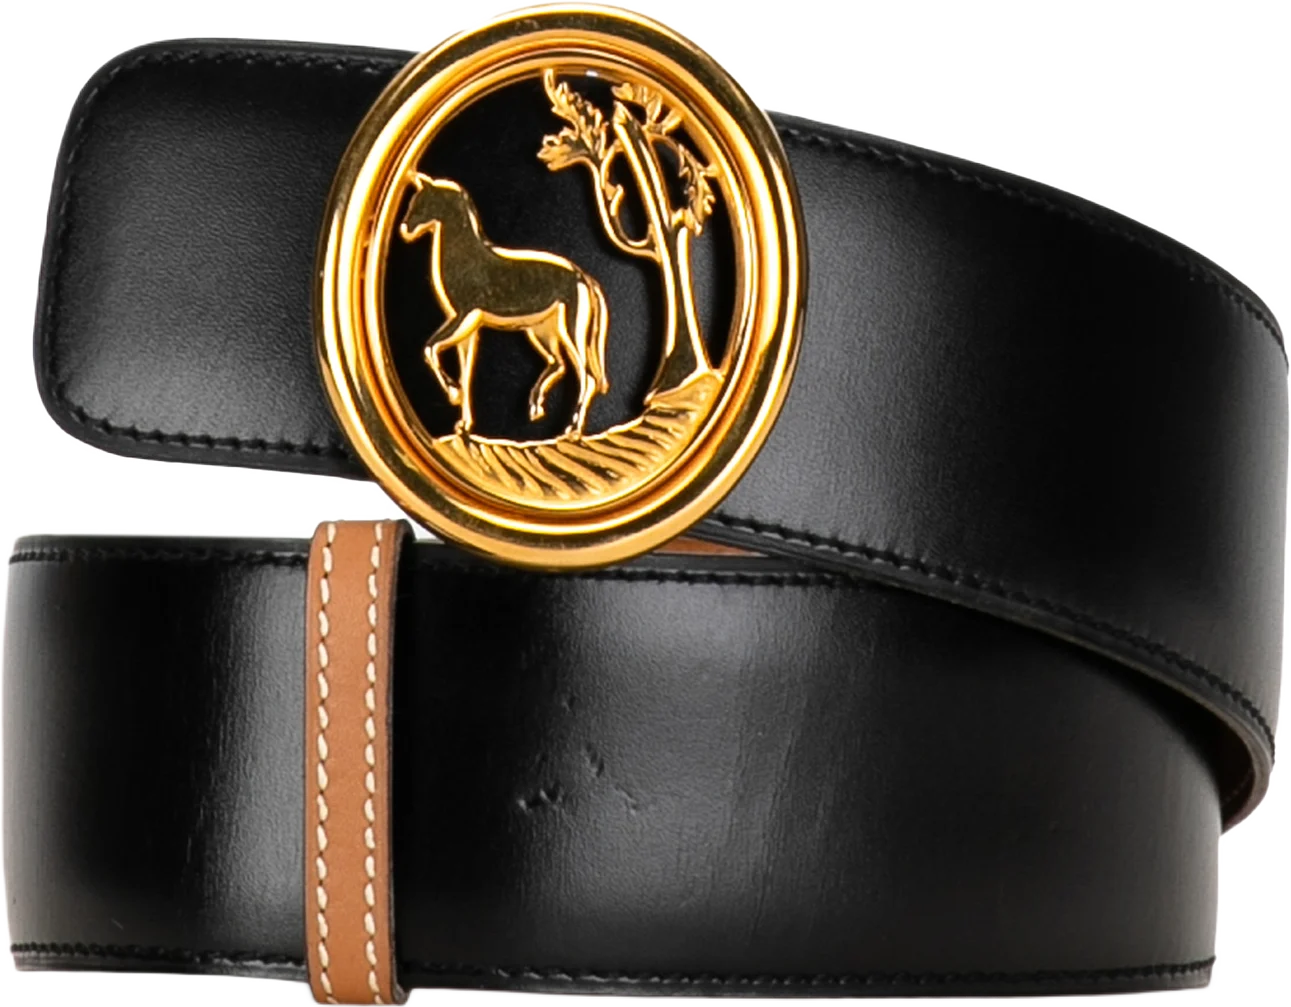 Hermès Horse Tree Emblem Leather Belt